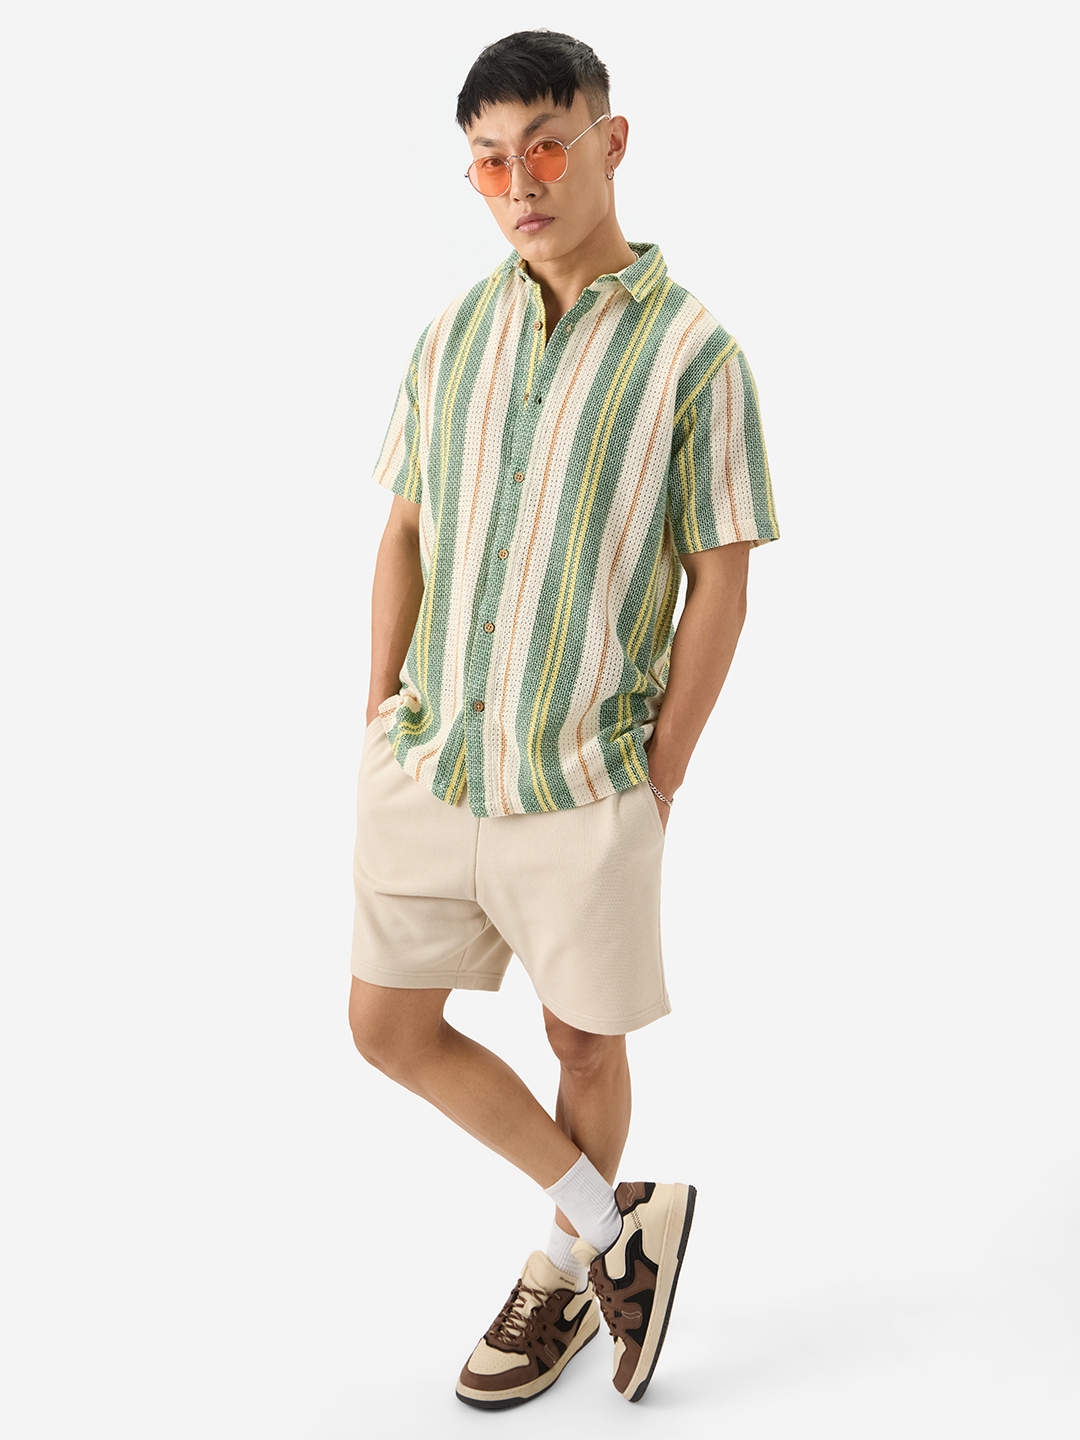 Men's Stripes Green, White, Yellow Half Sleeve Casual Shirt